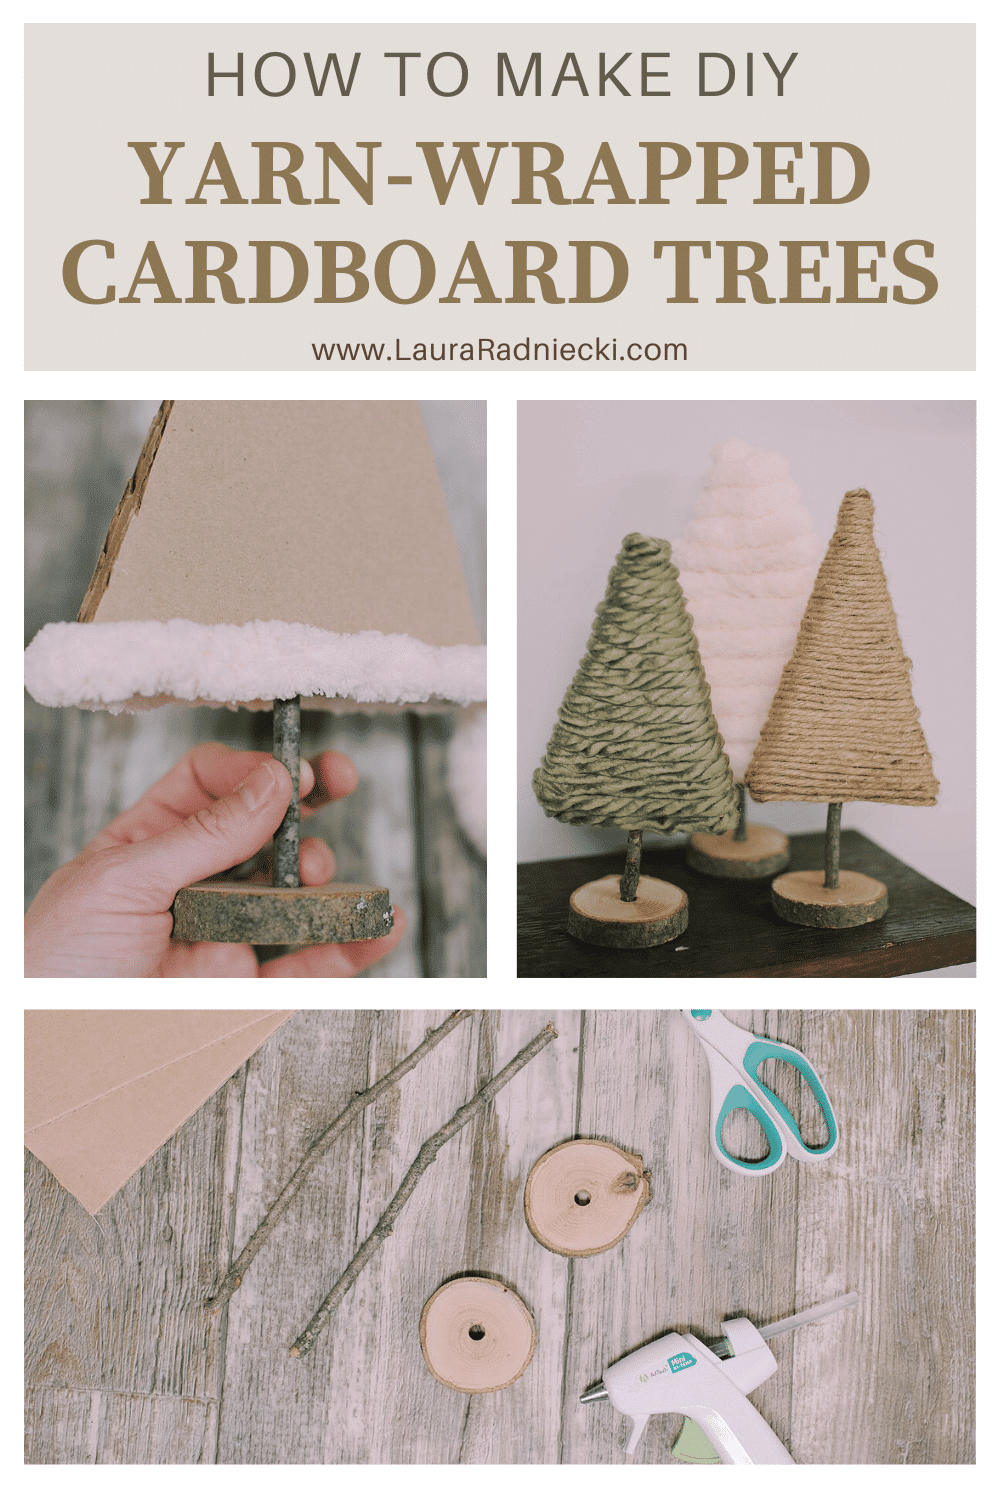 How to Make DIY Yarn-Wrapped Cardboard Trees